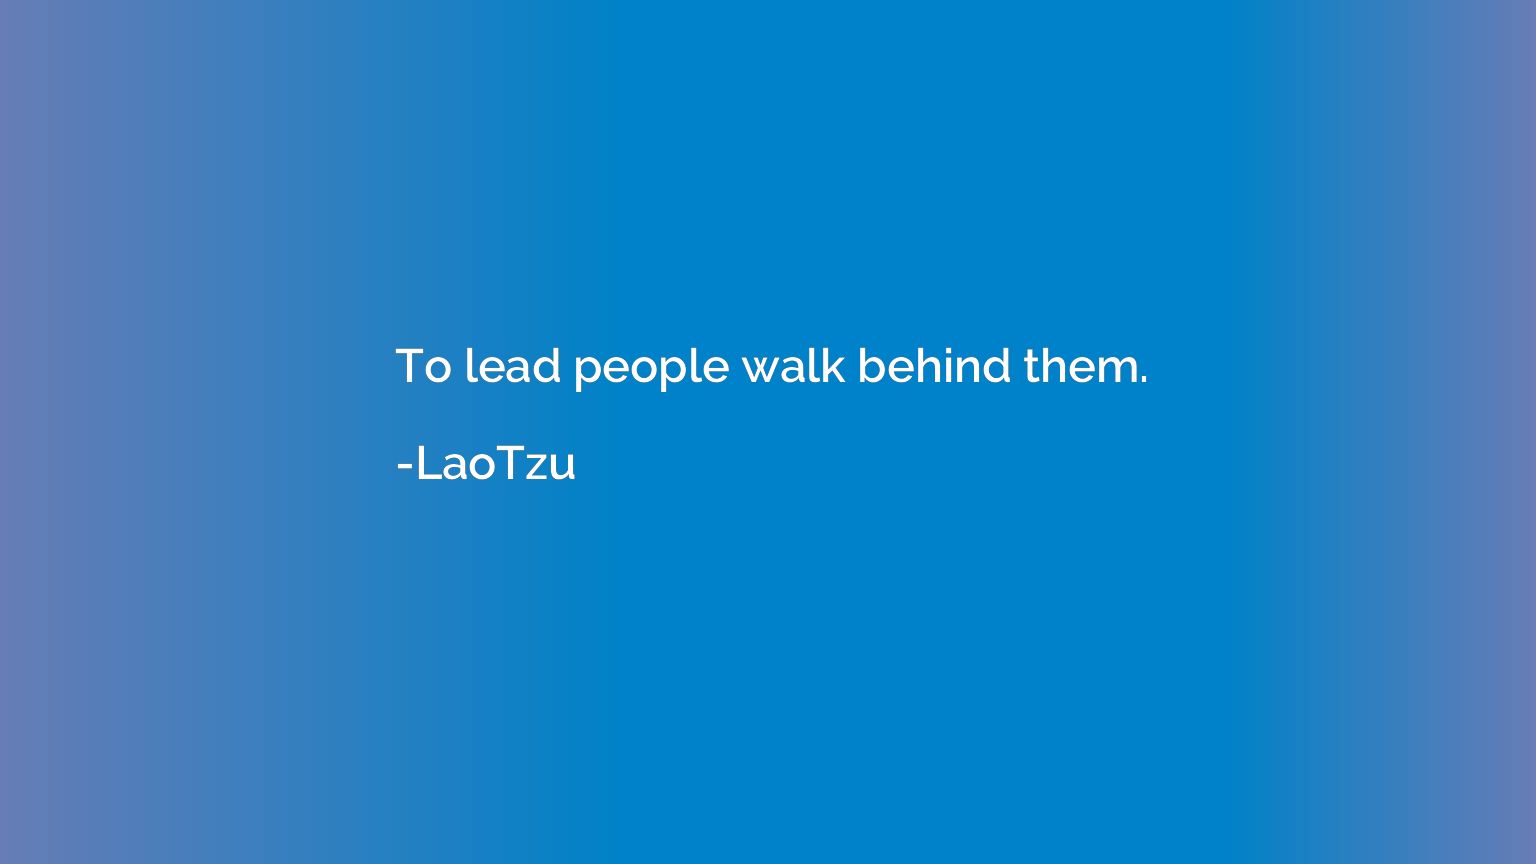 To lead people walk behind them.